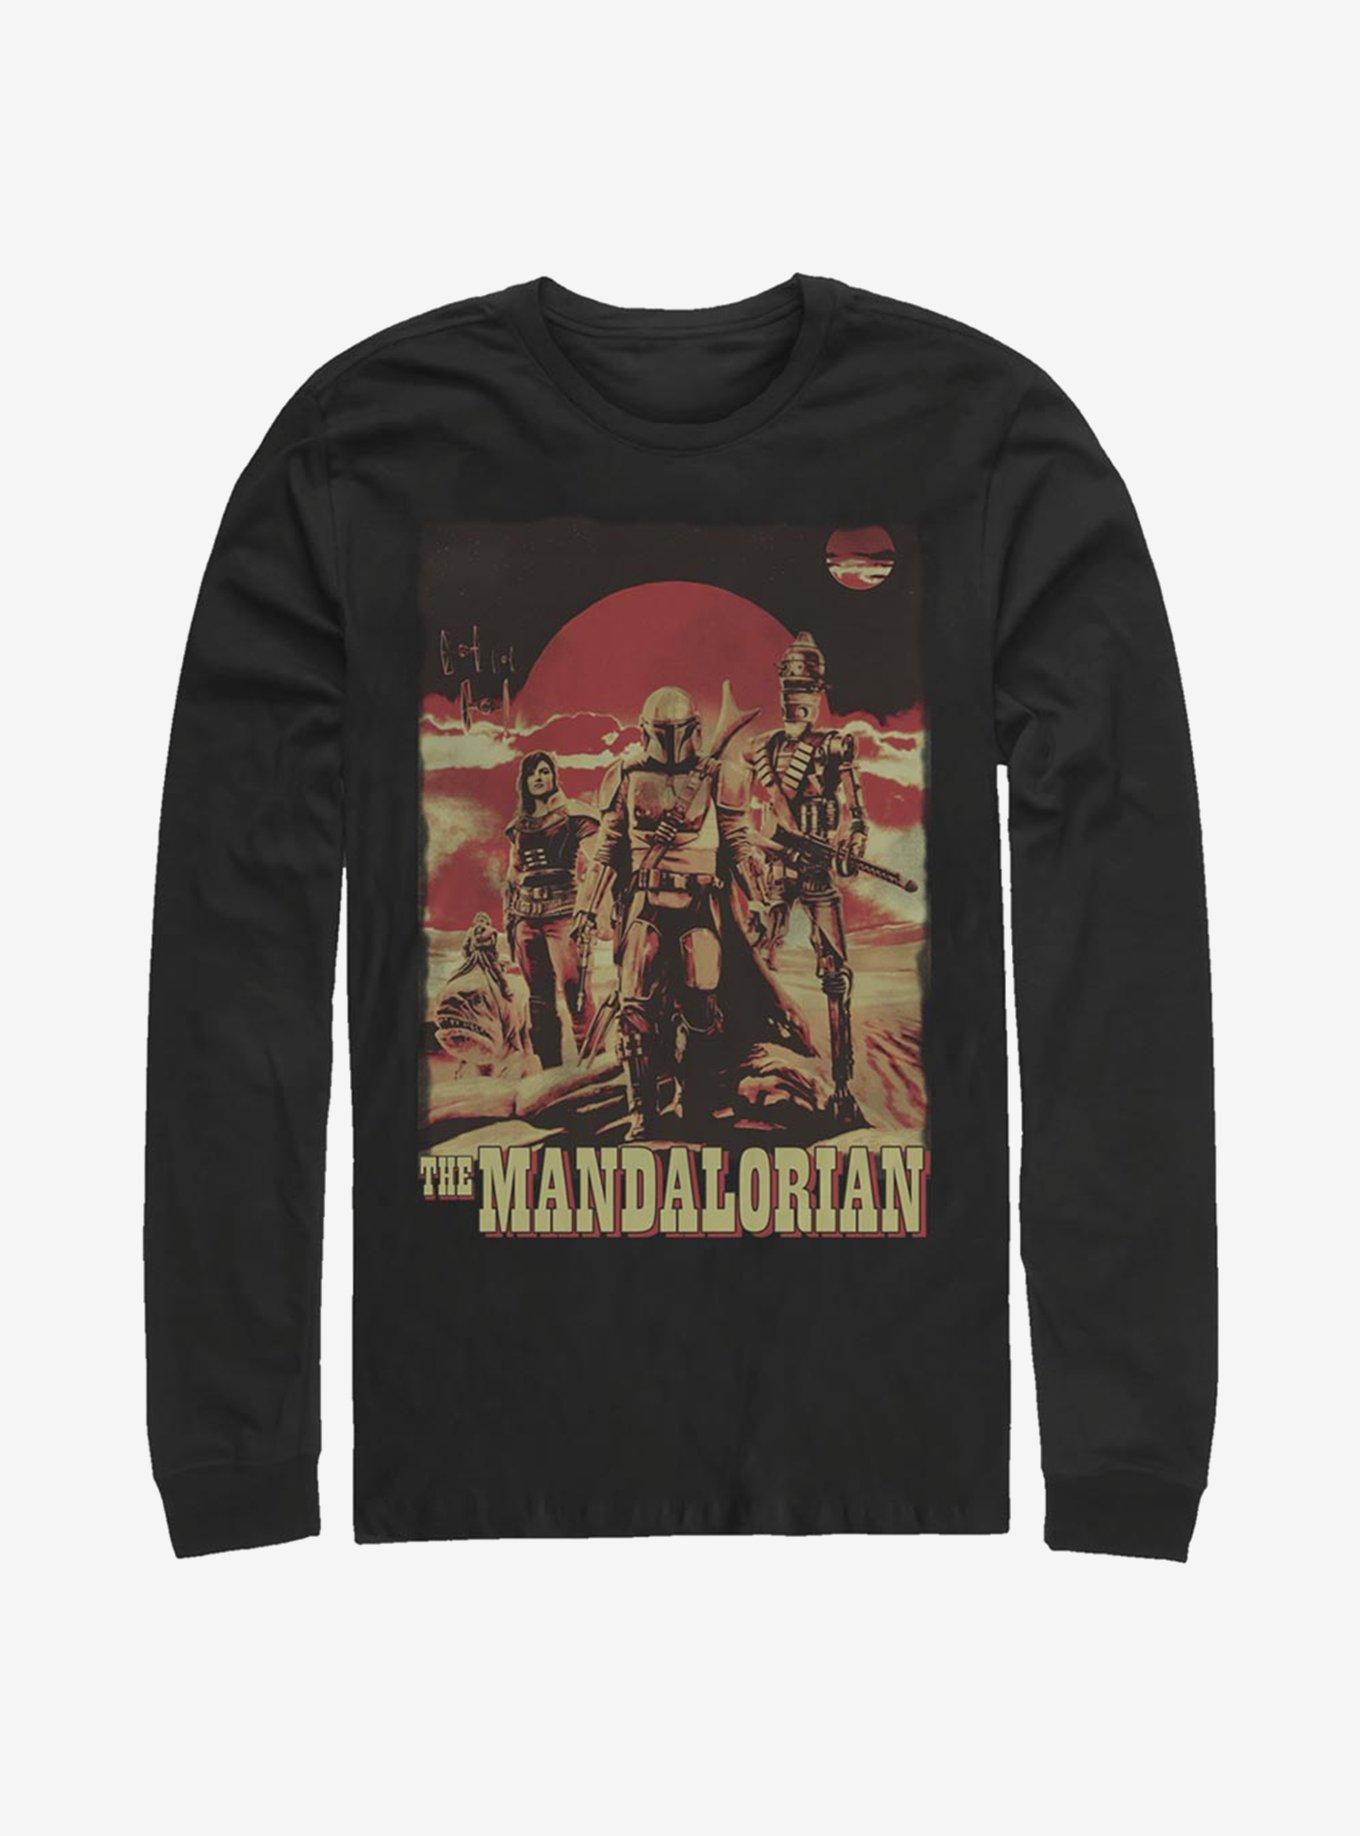 Star Wars The Mandalorian Gritty Long-Sleeve T-Shirt